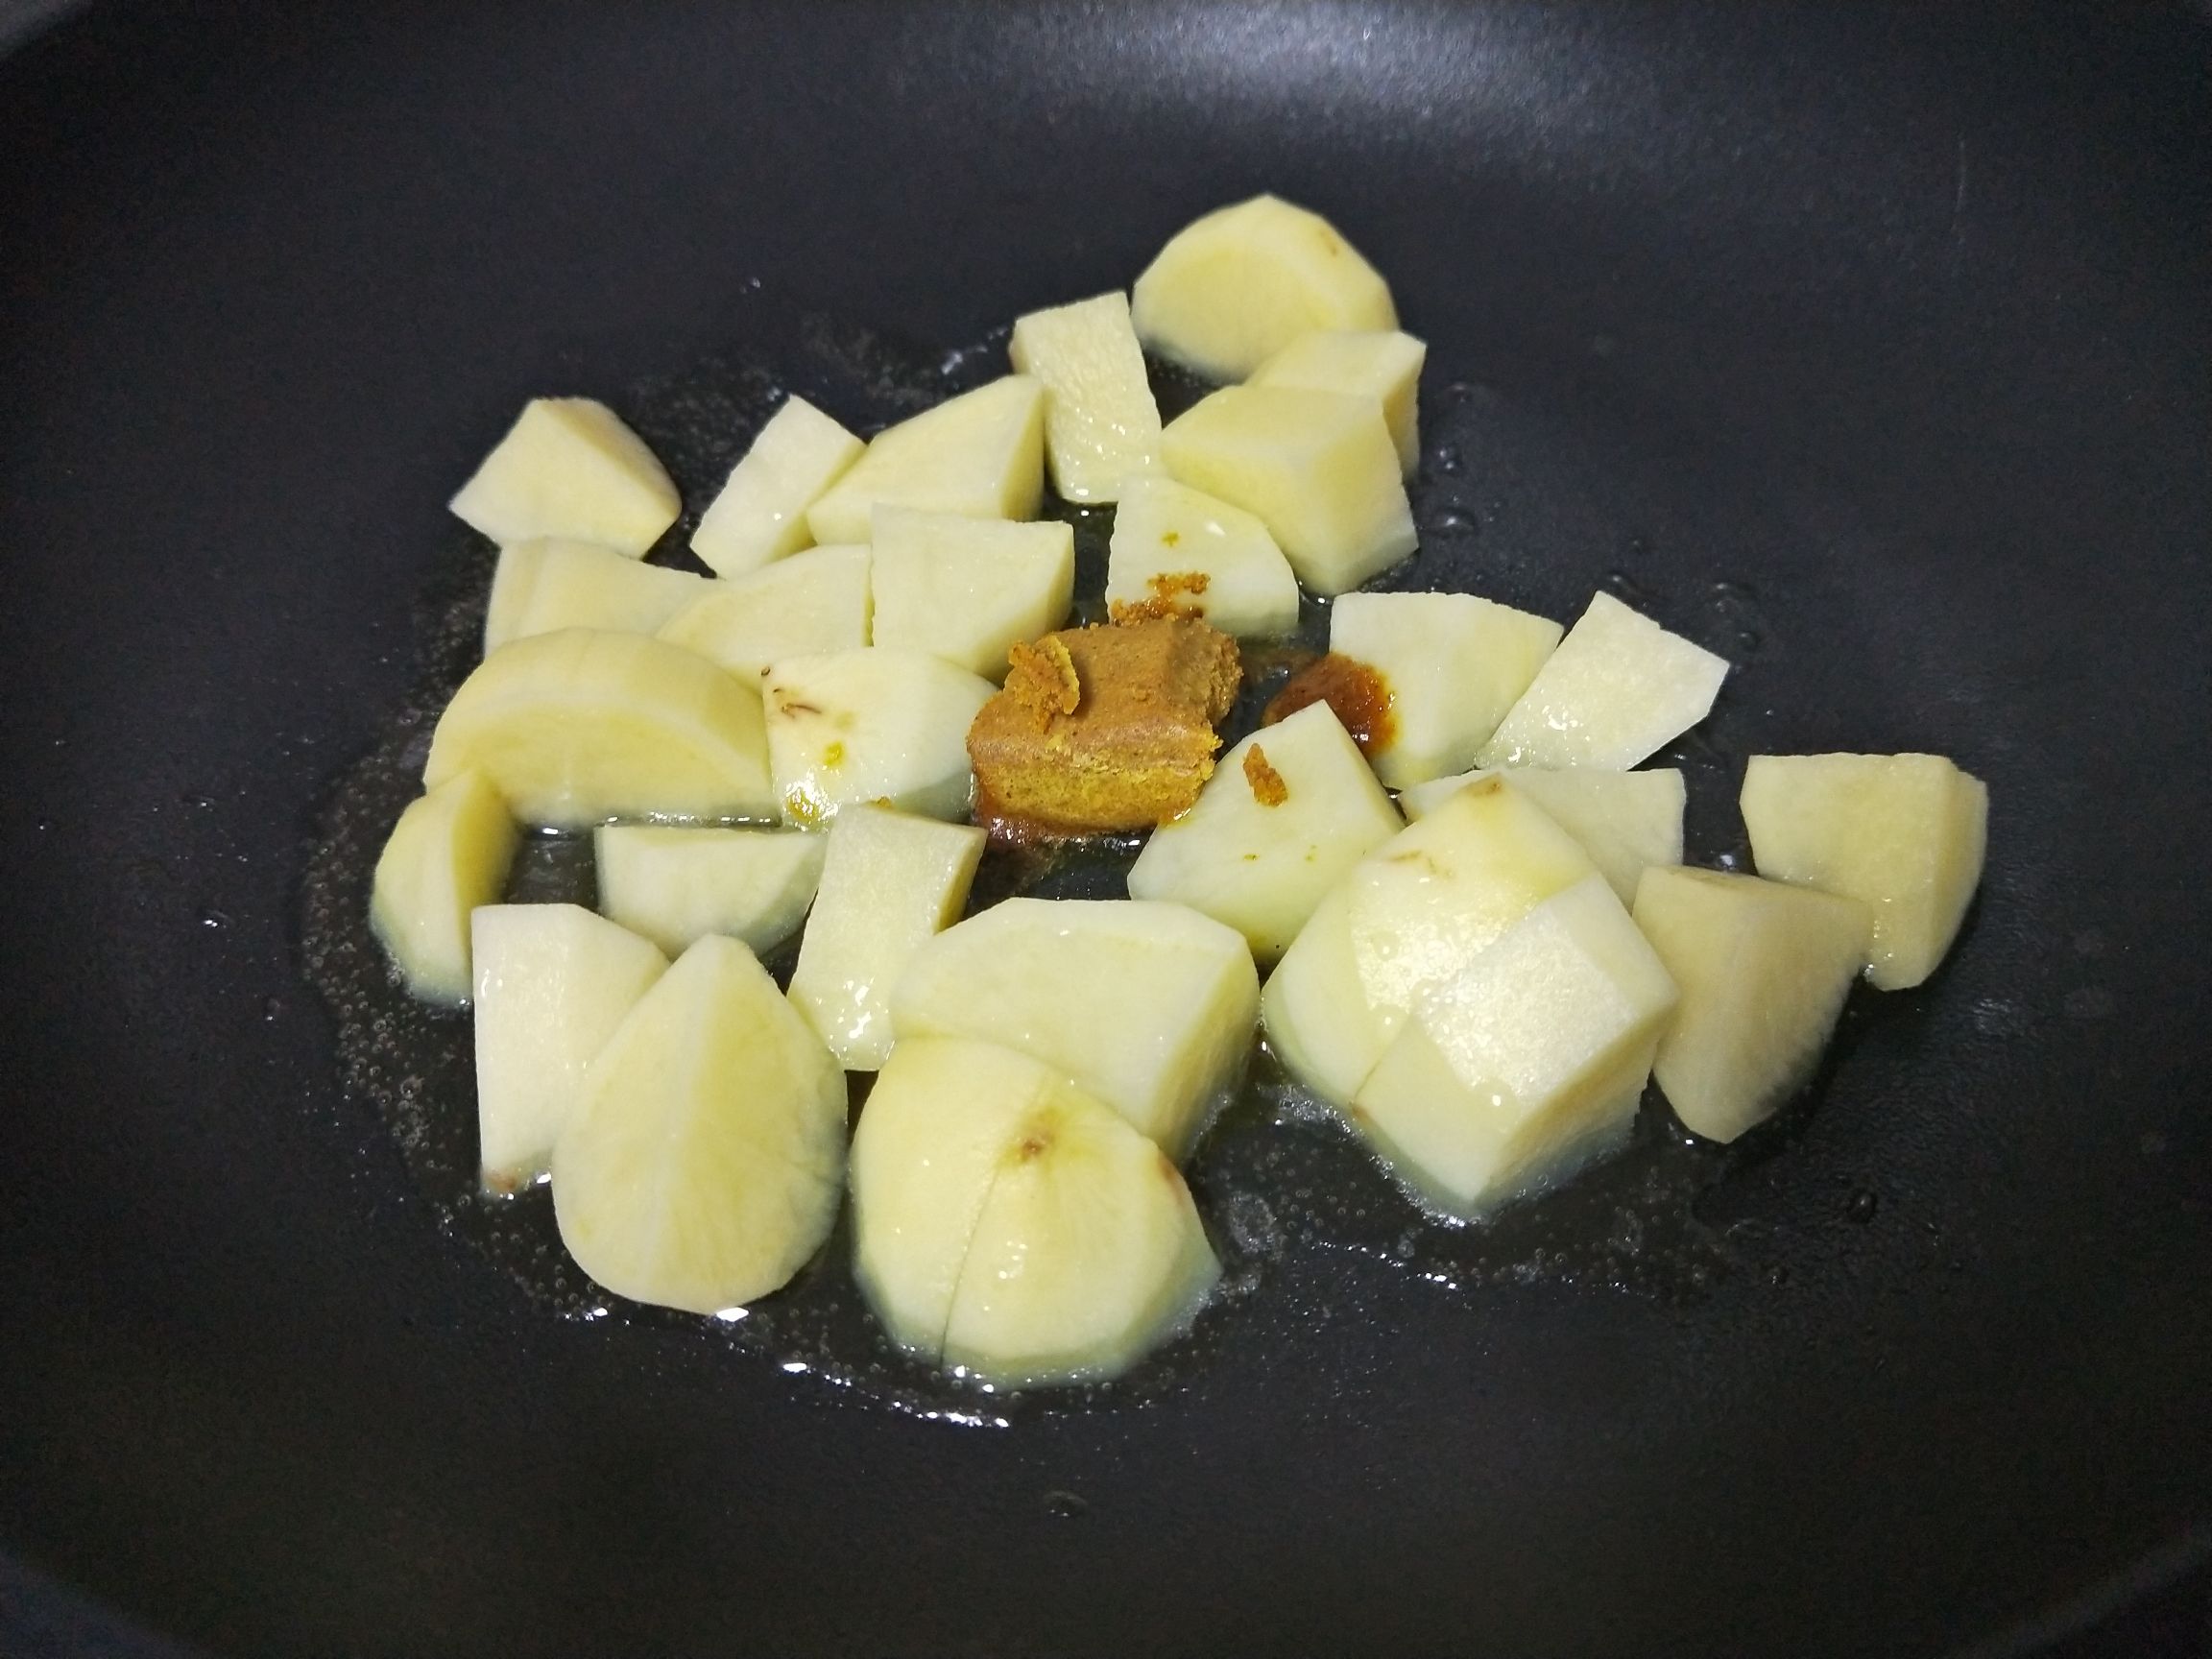 Curry Meatballs and Potato Braised Rice recipe